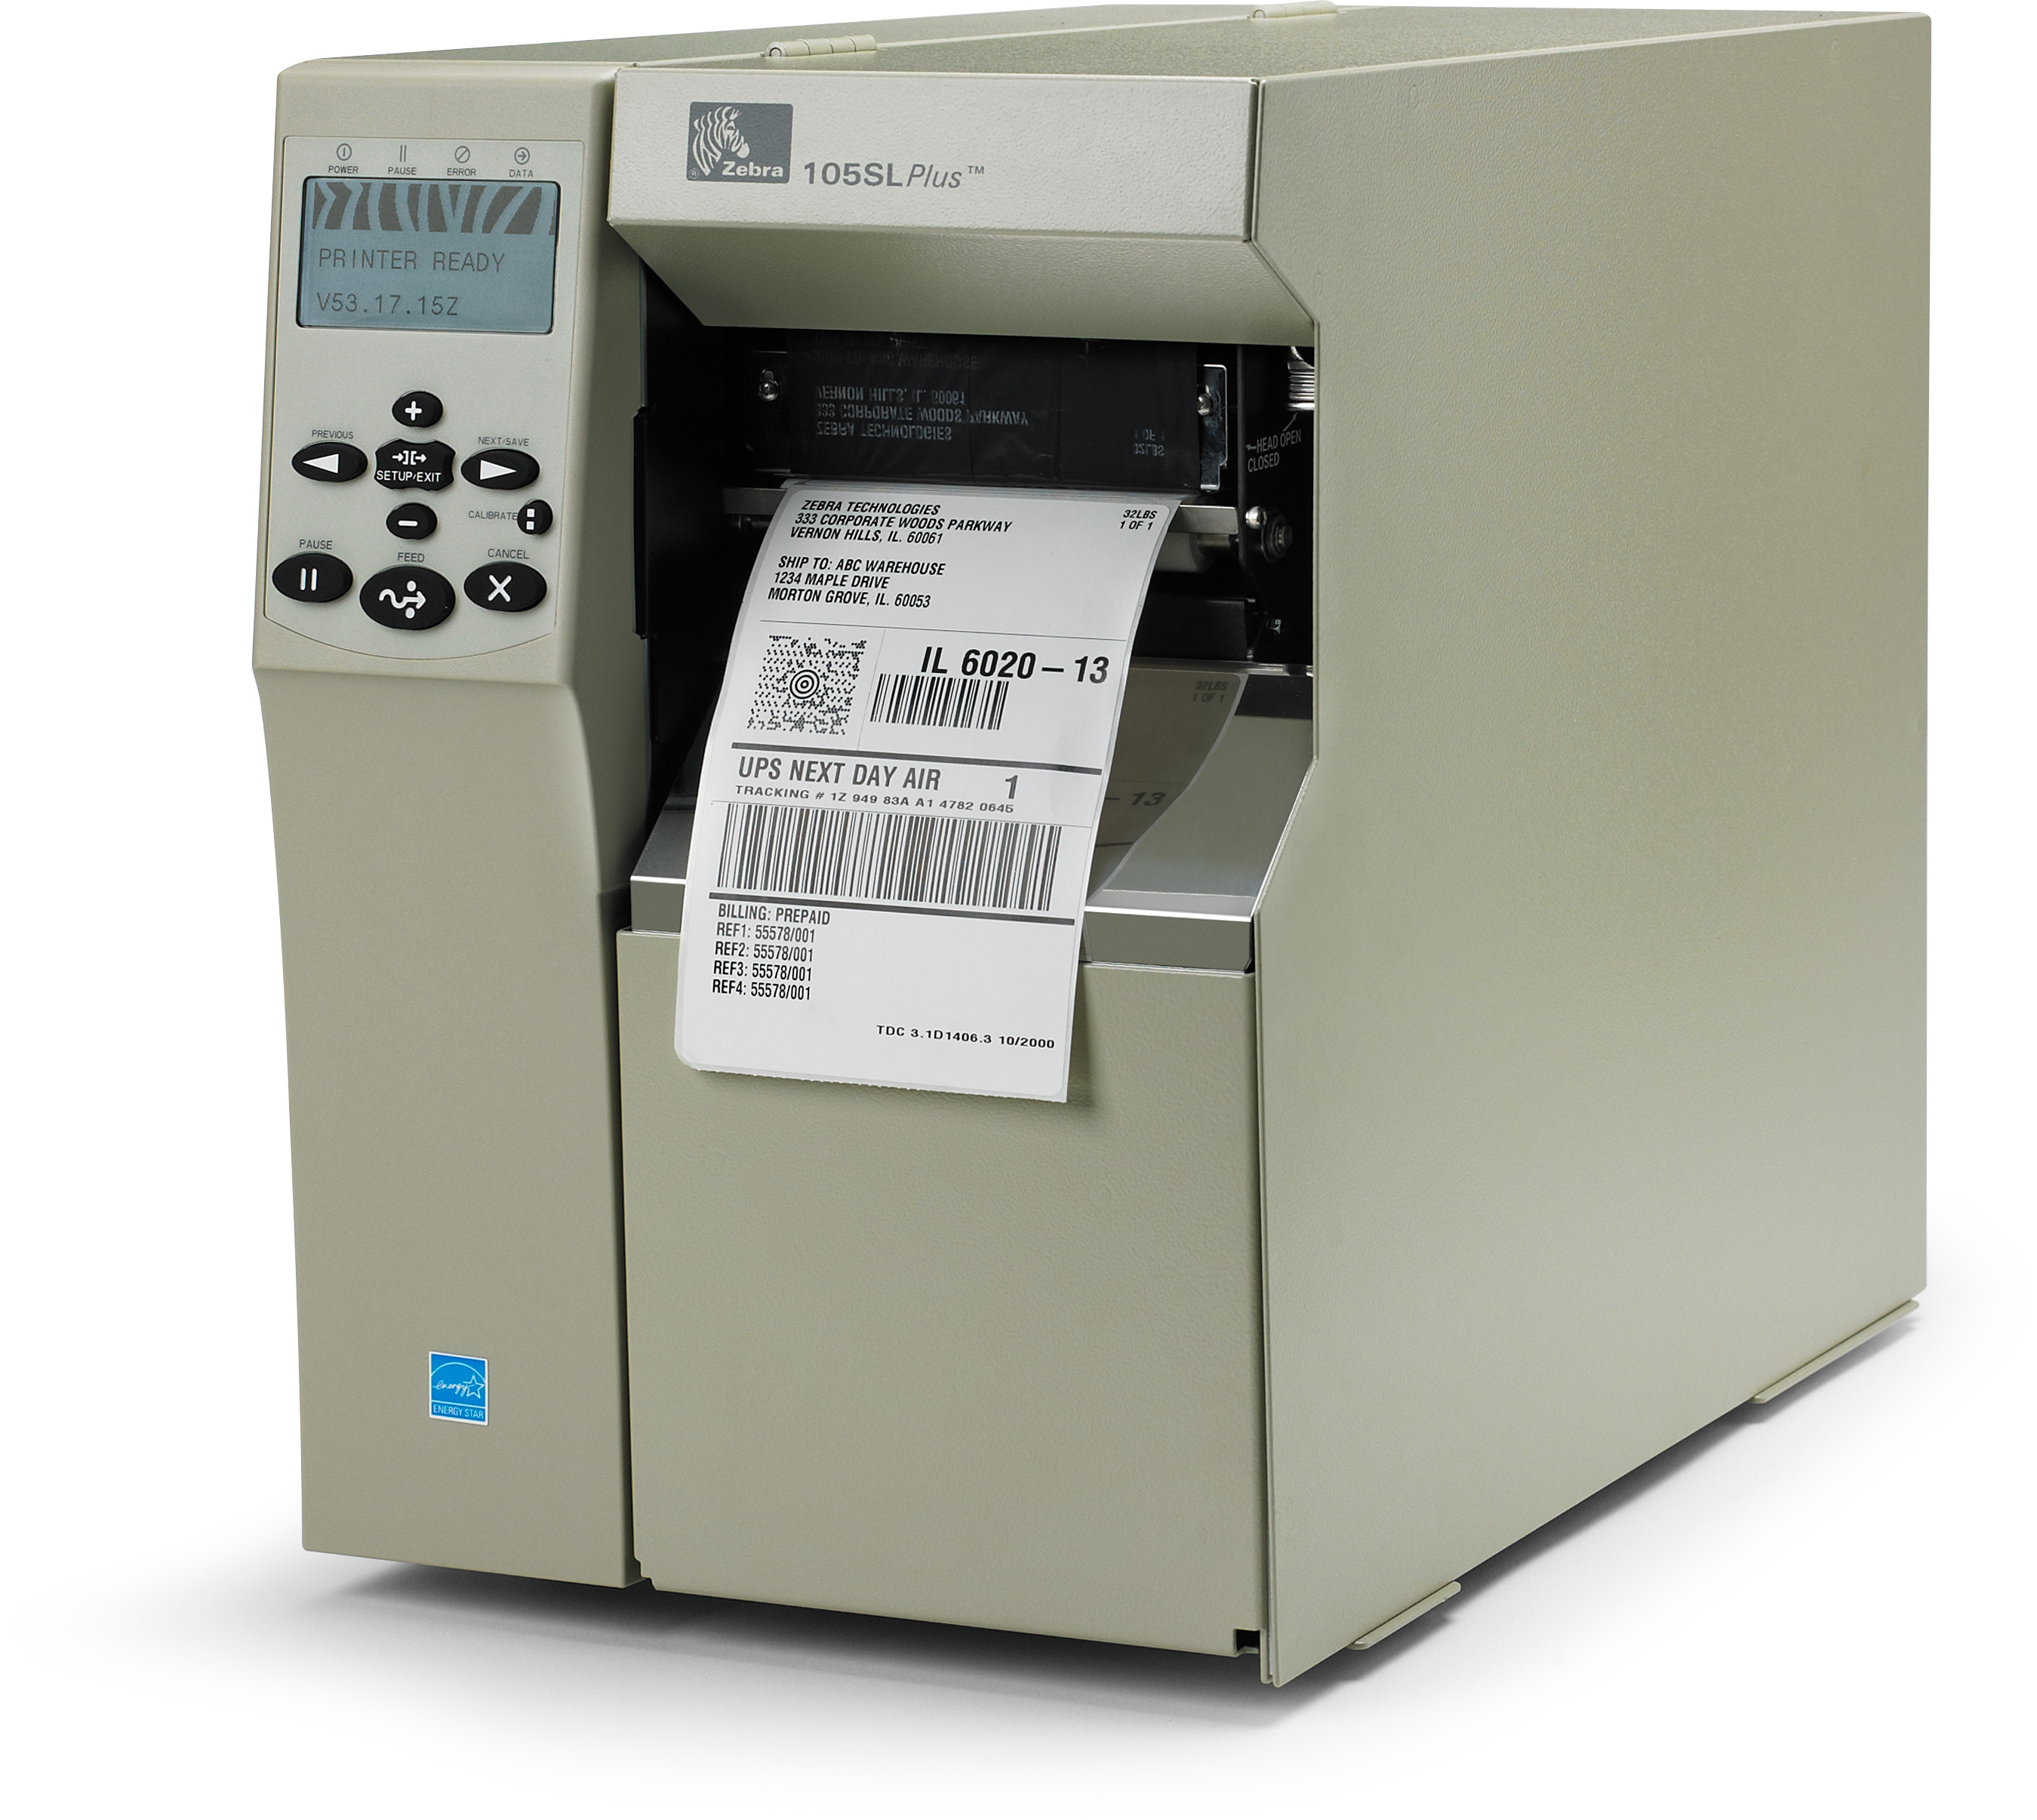 Zebra 105sl Plus Printer Weber Labels Uk 6888